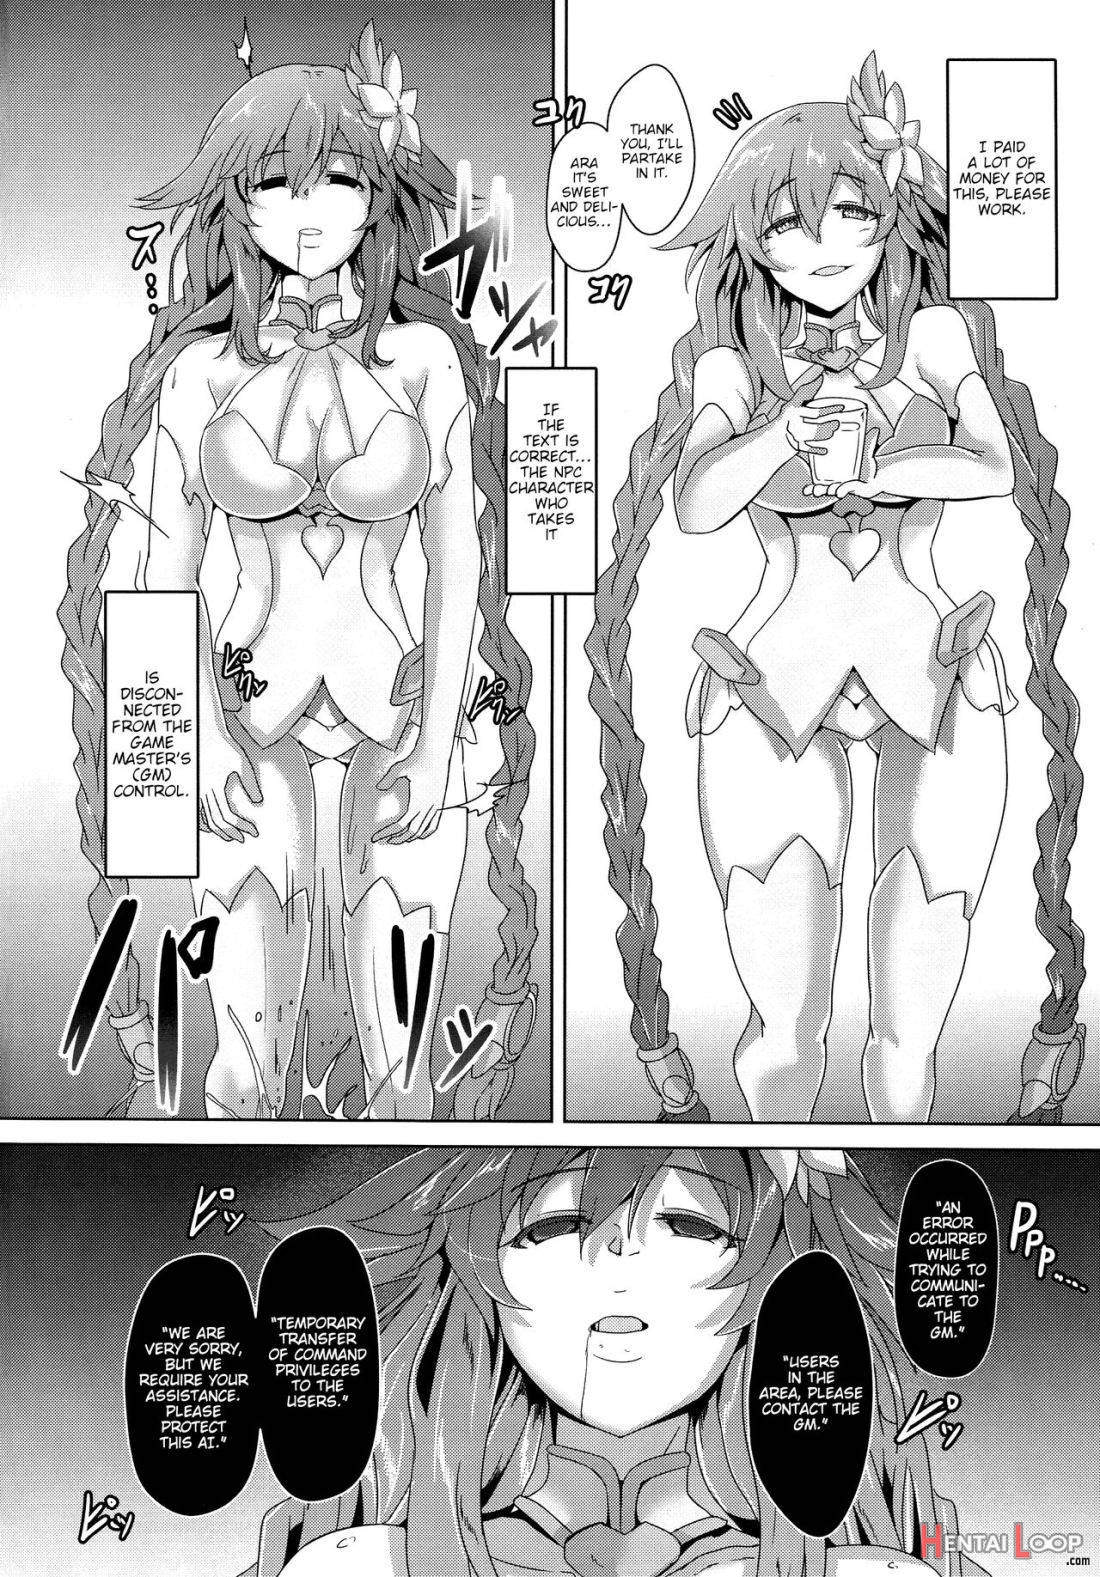 Megami-sama page 4